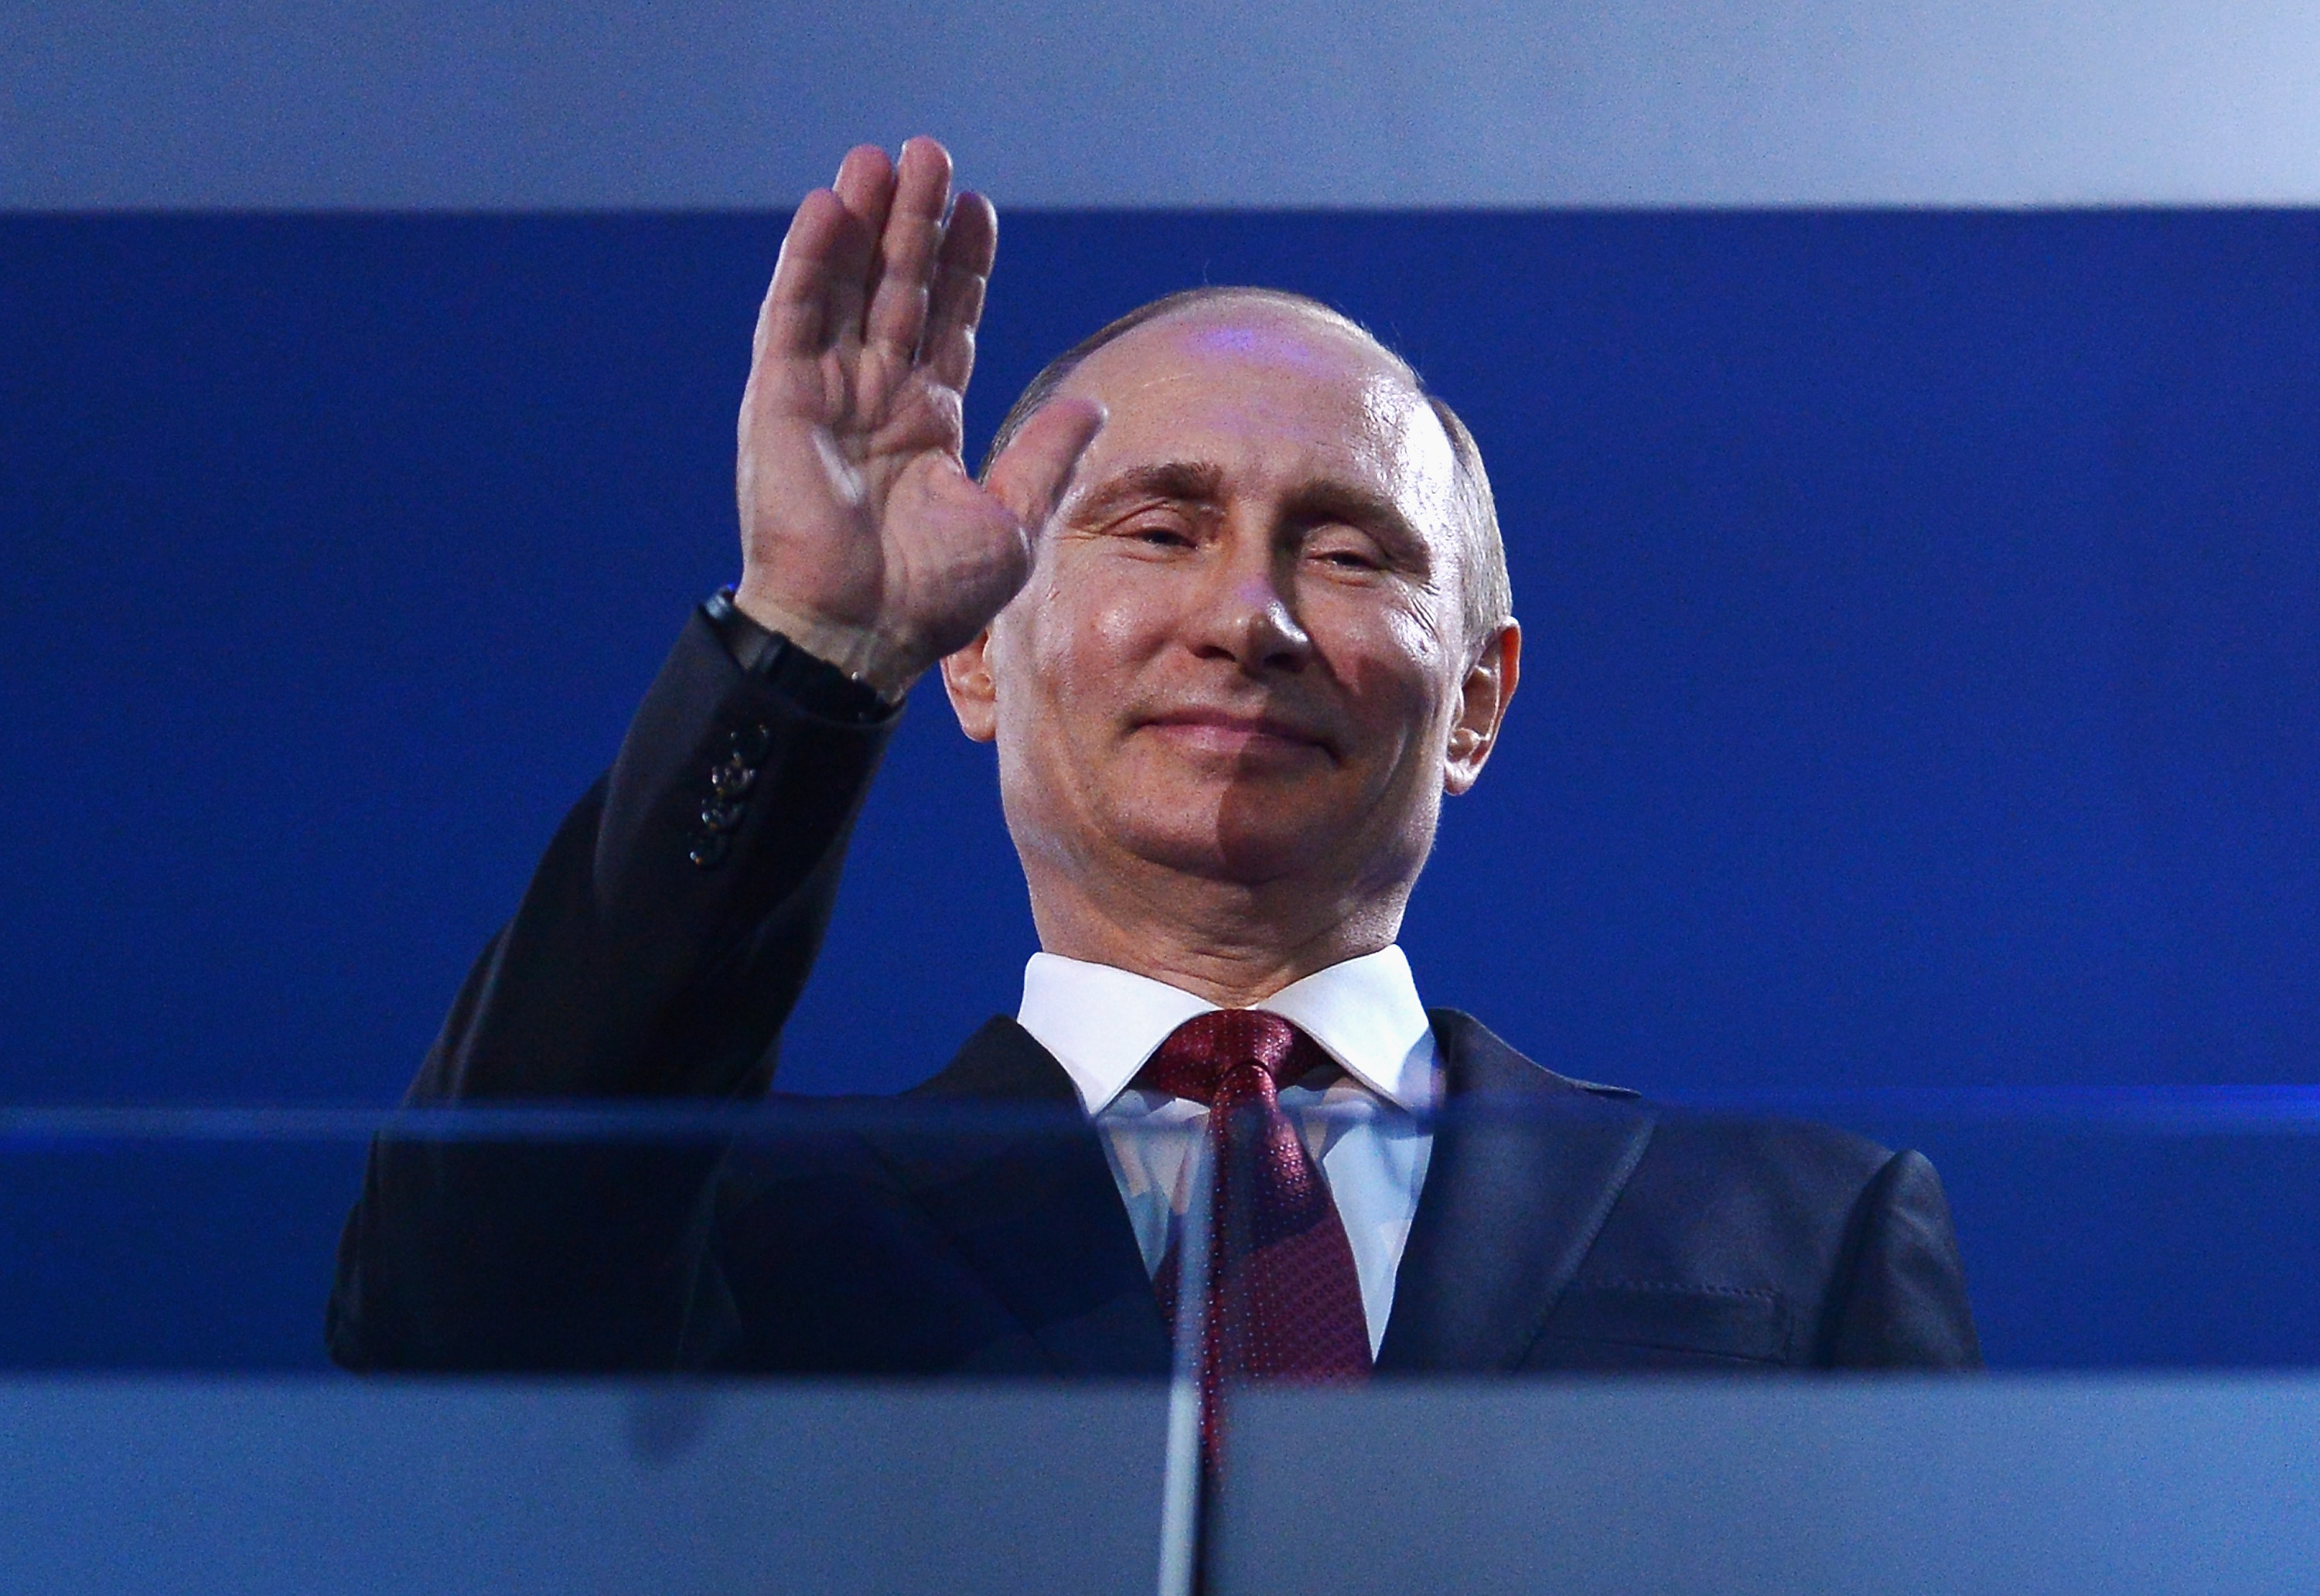 Putin Slams U.S. & West In St. Petersburg International Economic Forum Speech